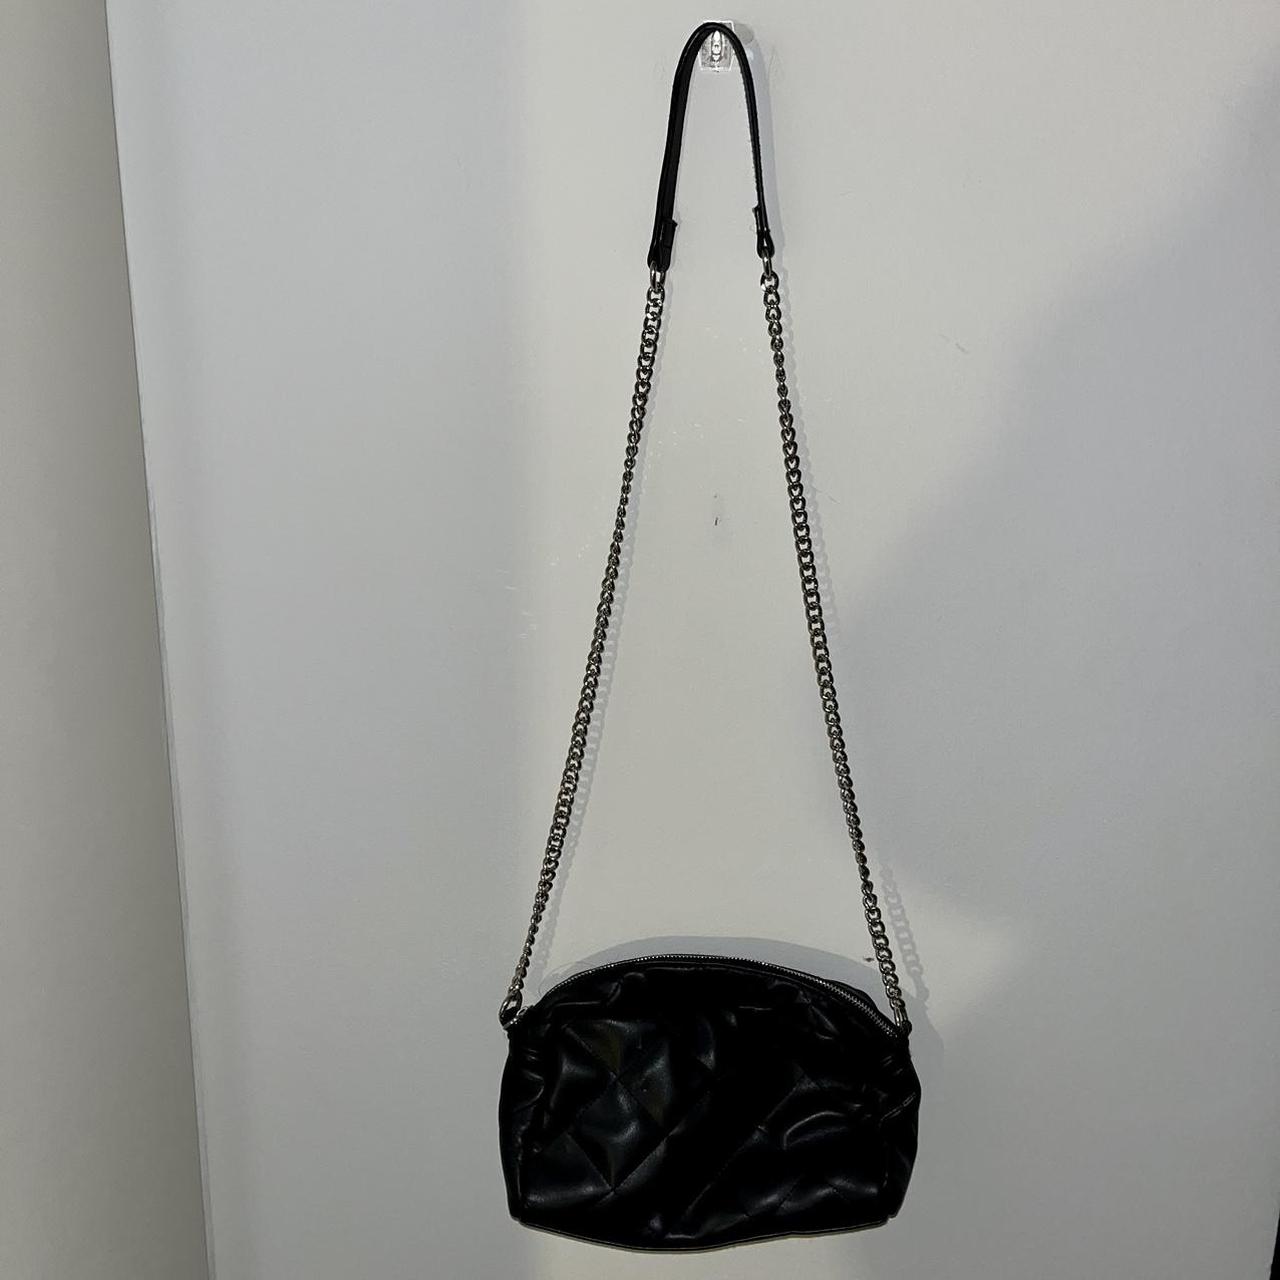 Stradivarius crossbody bag - black with chain... - Depop